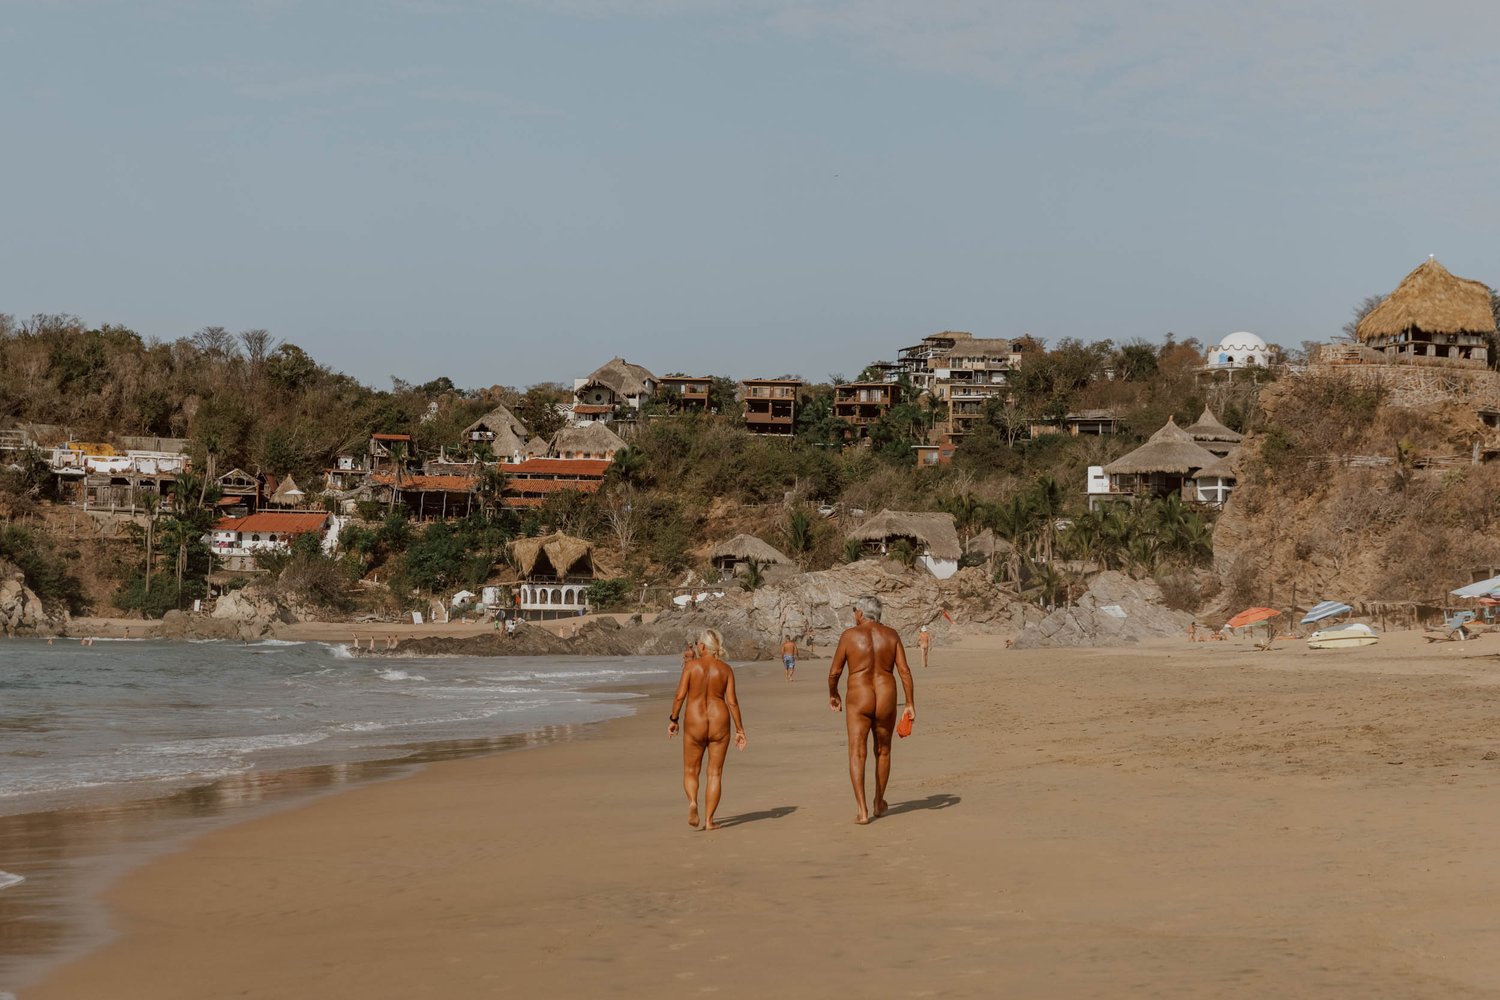 brett napoli recommends playa del carmen nudist beach pic